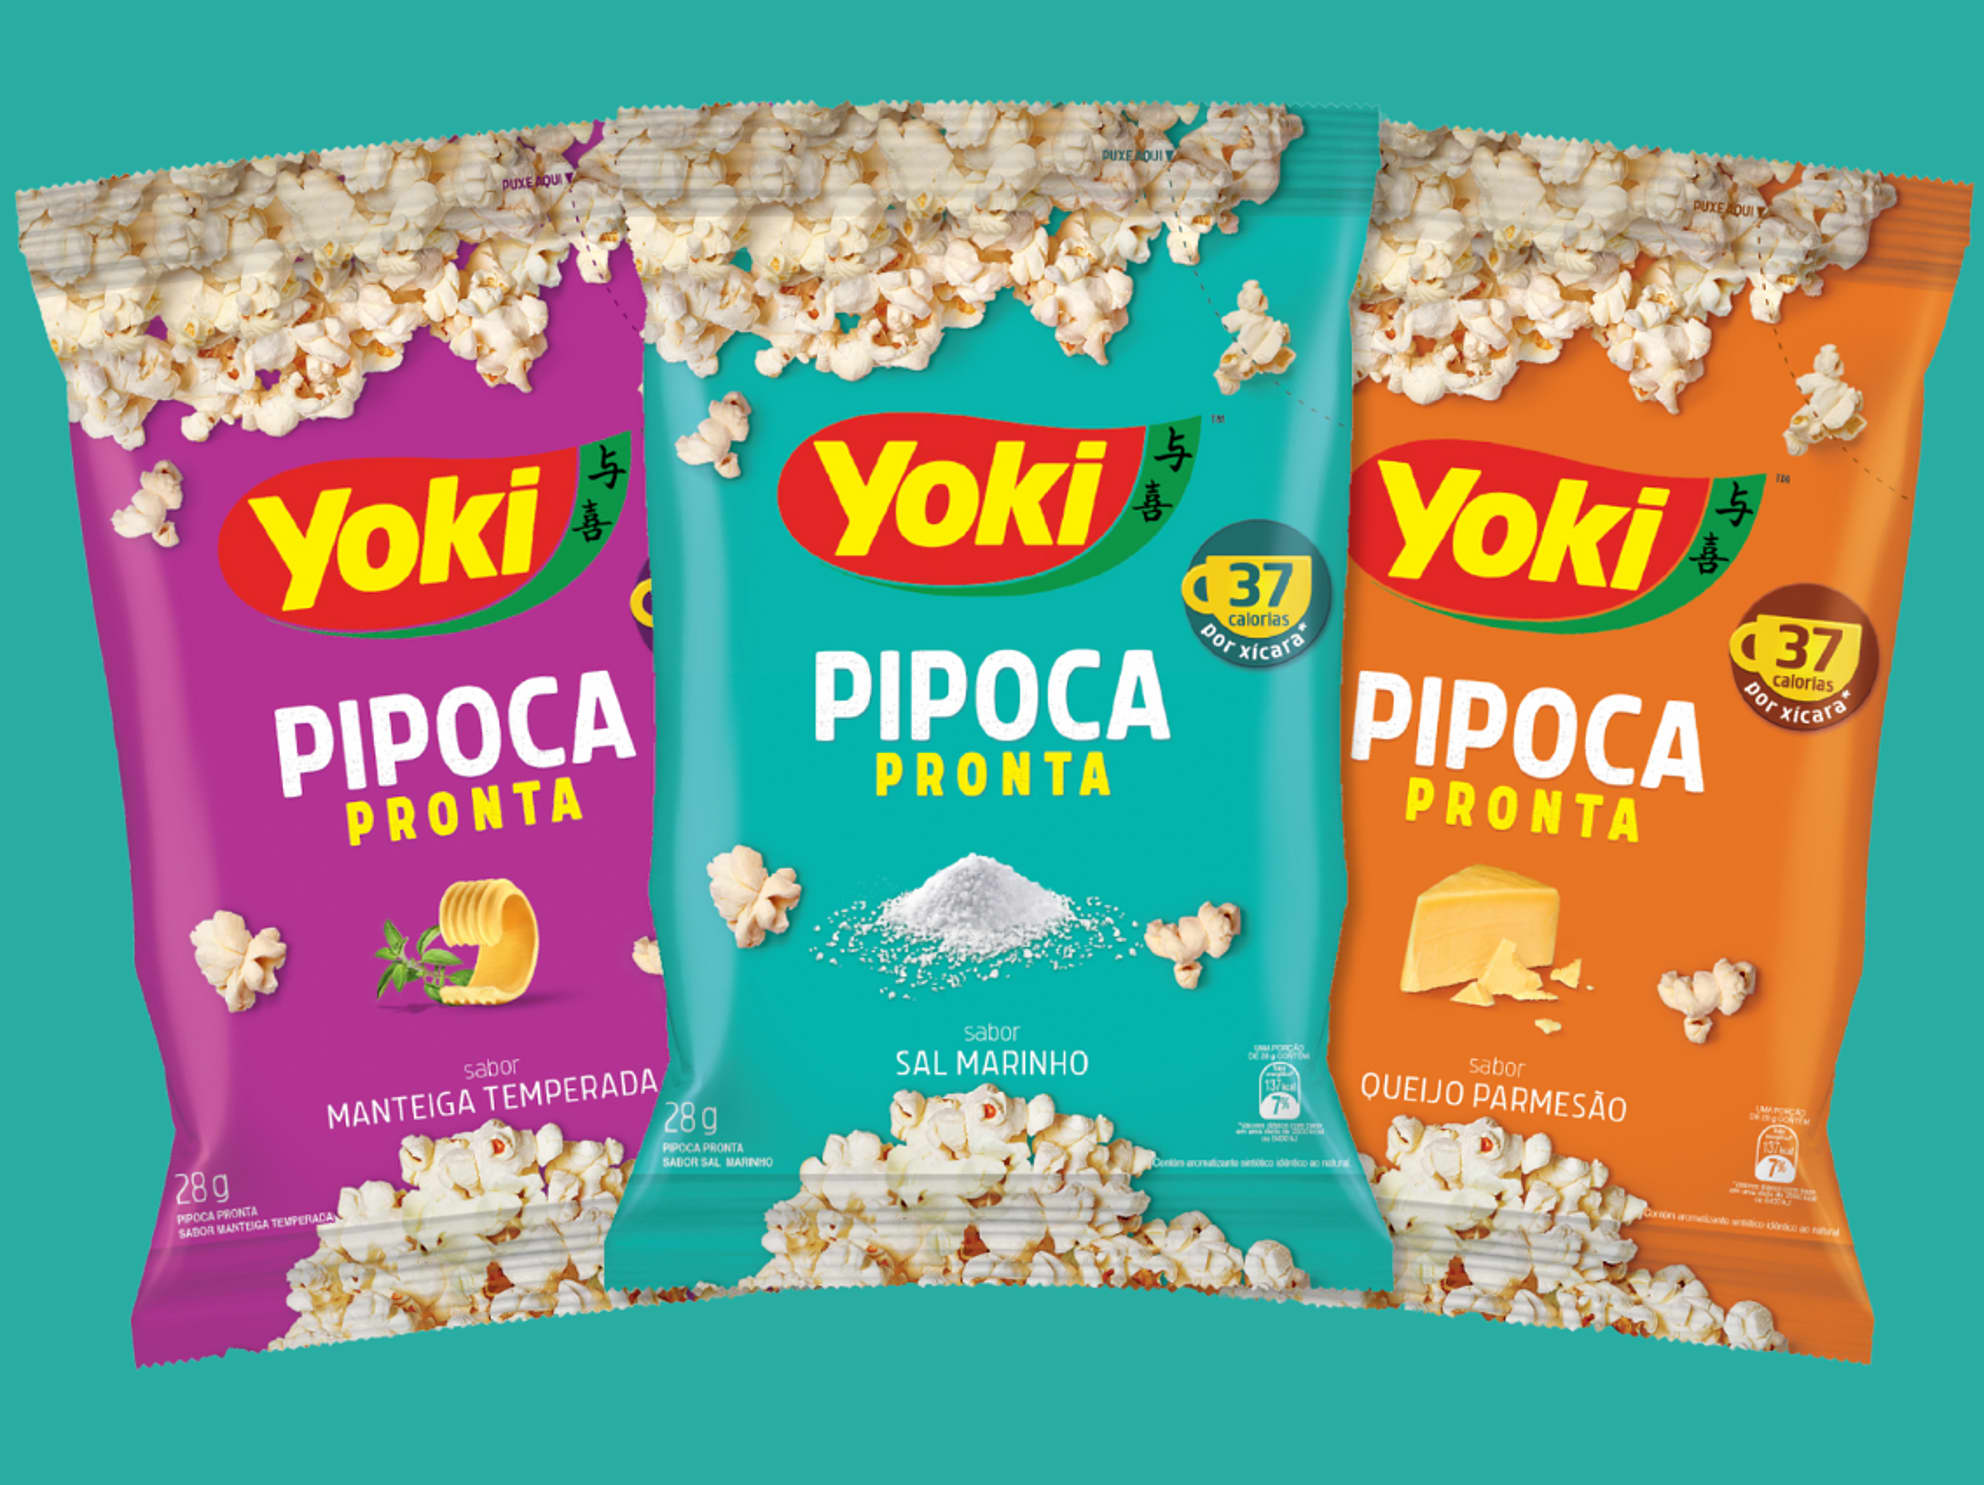 Yoki Pipoca Pronta popcorn packaging